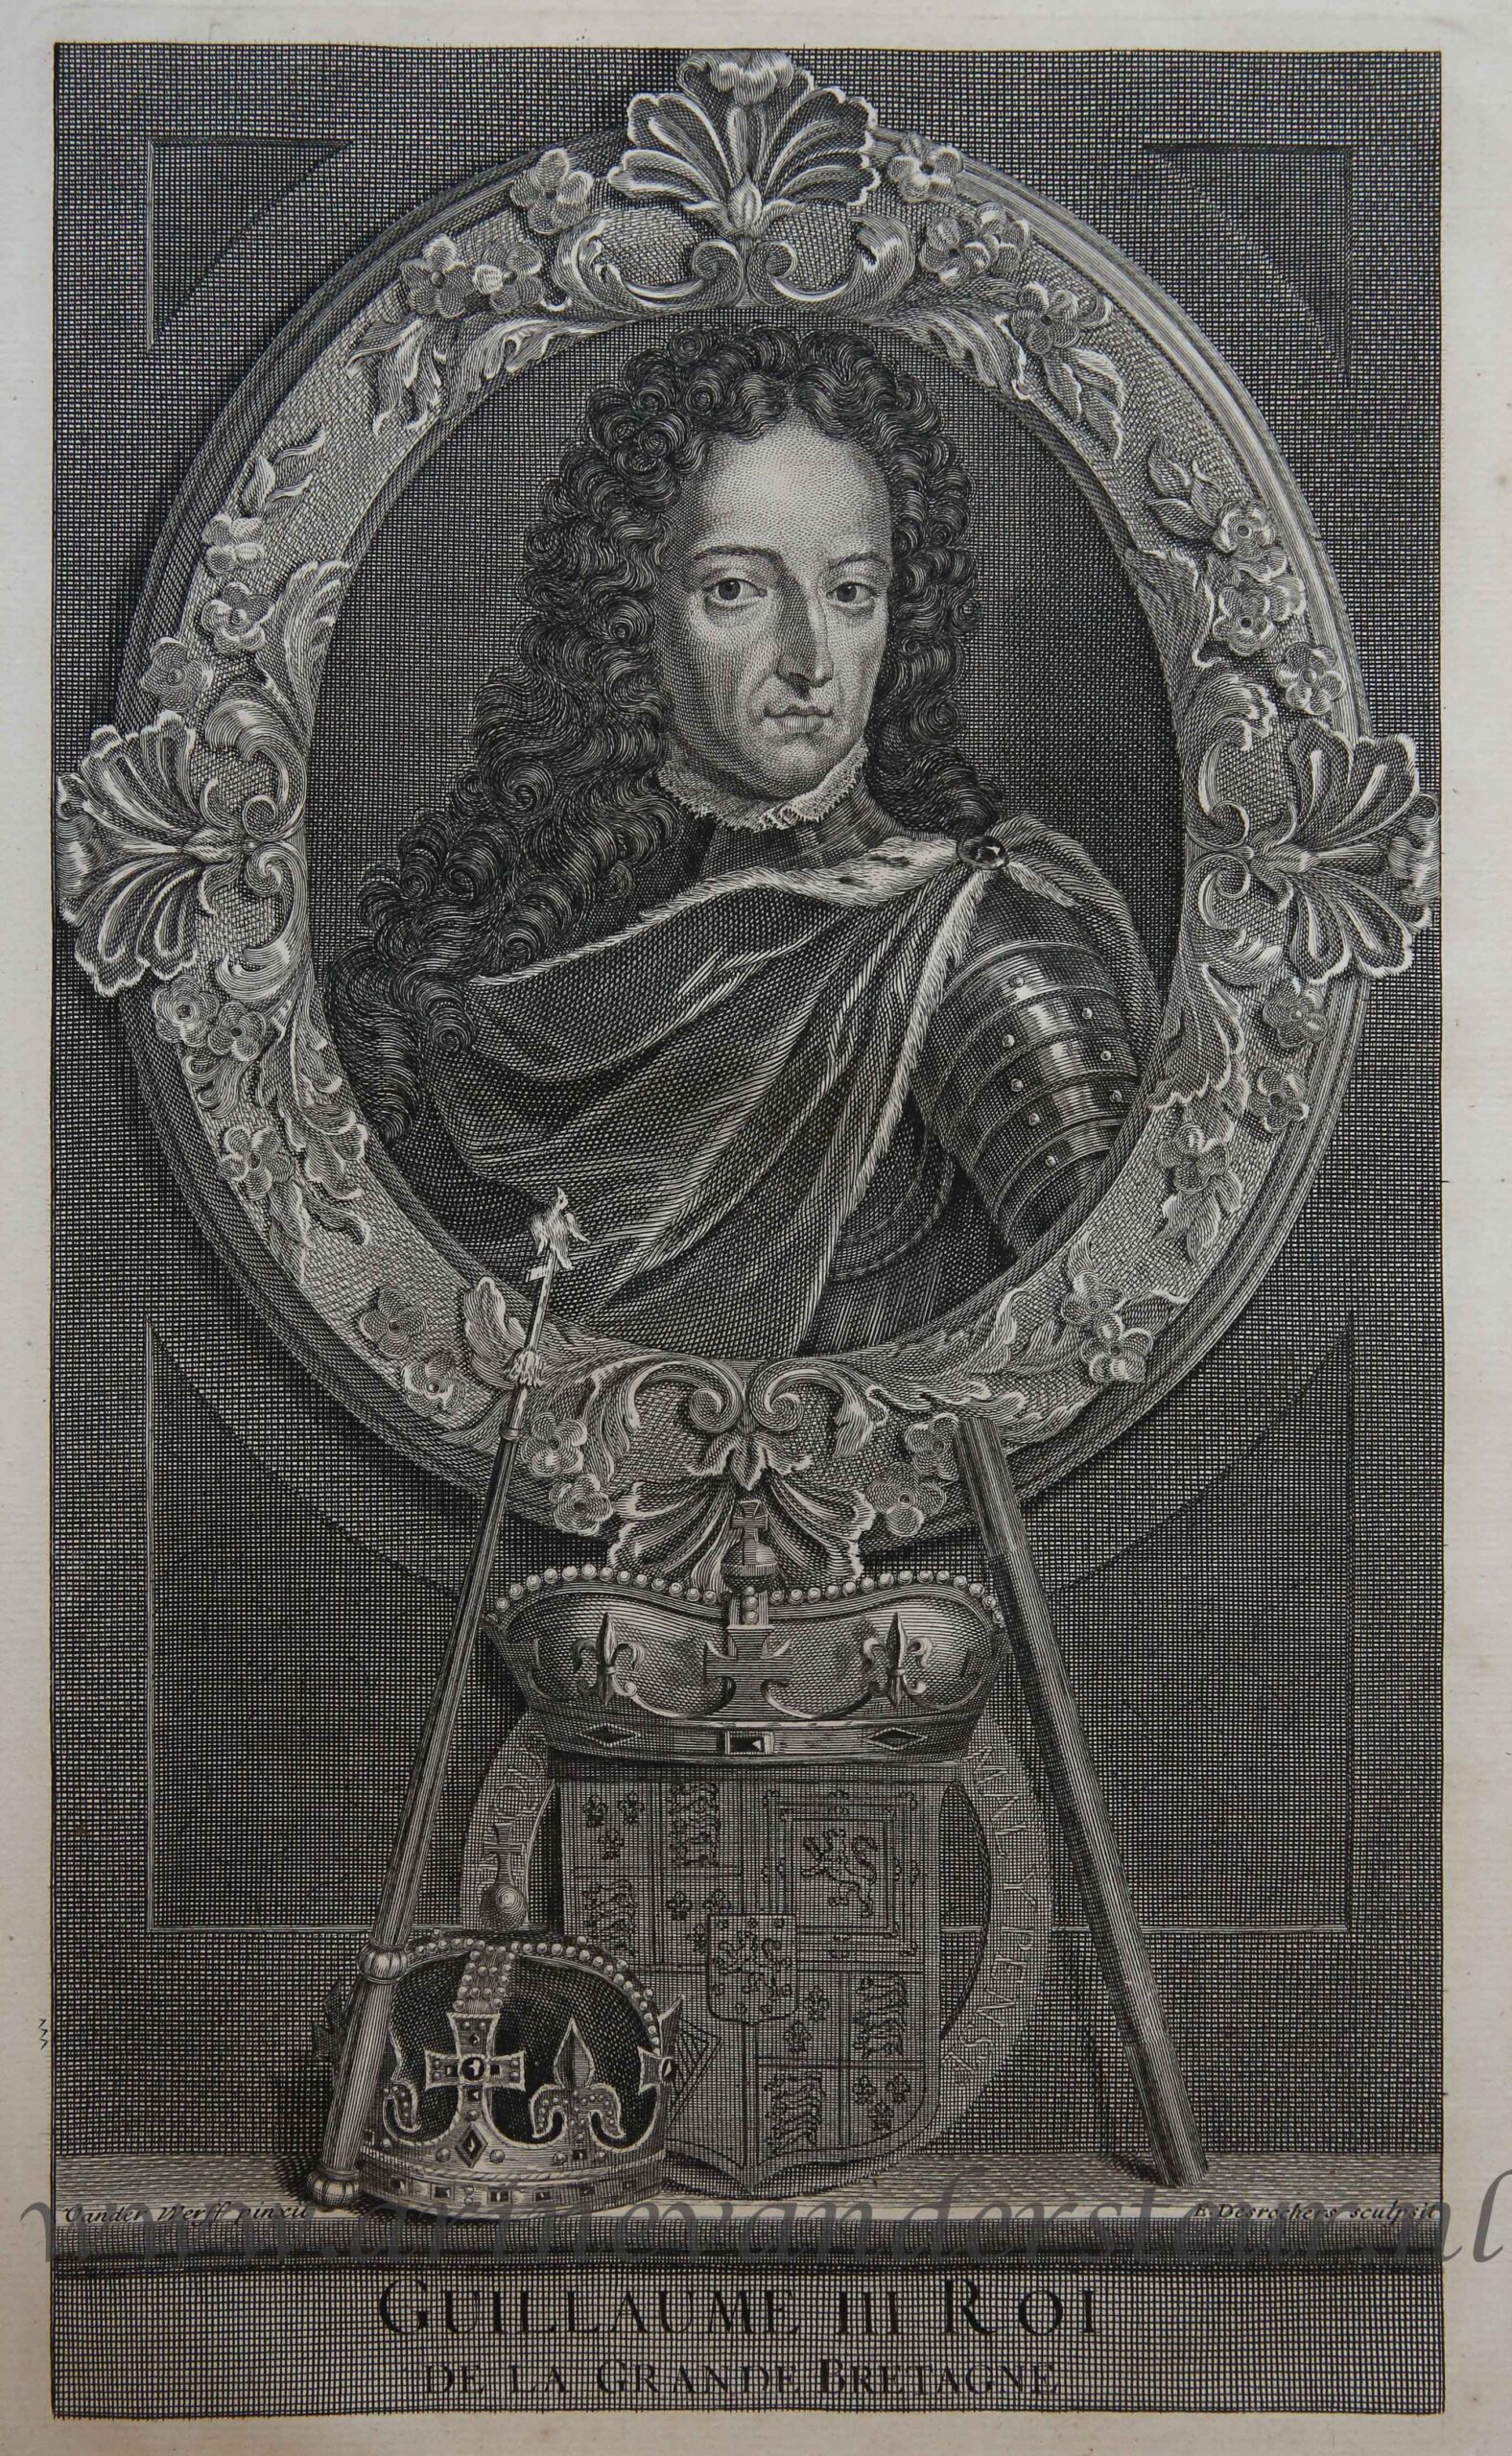 Etienne Desrocher (1668-1741), after Adriaen van de Werff (1659-1722) - [Antique print; engraving] GUILLAUME III ROI DE LA GRANDE BRETAGNE (Willem de derde, koning van Bretagne), published ca. 1730.